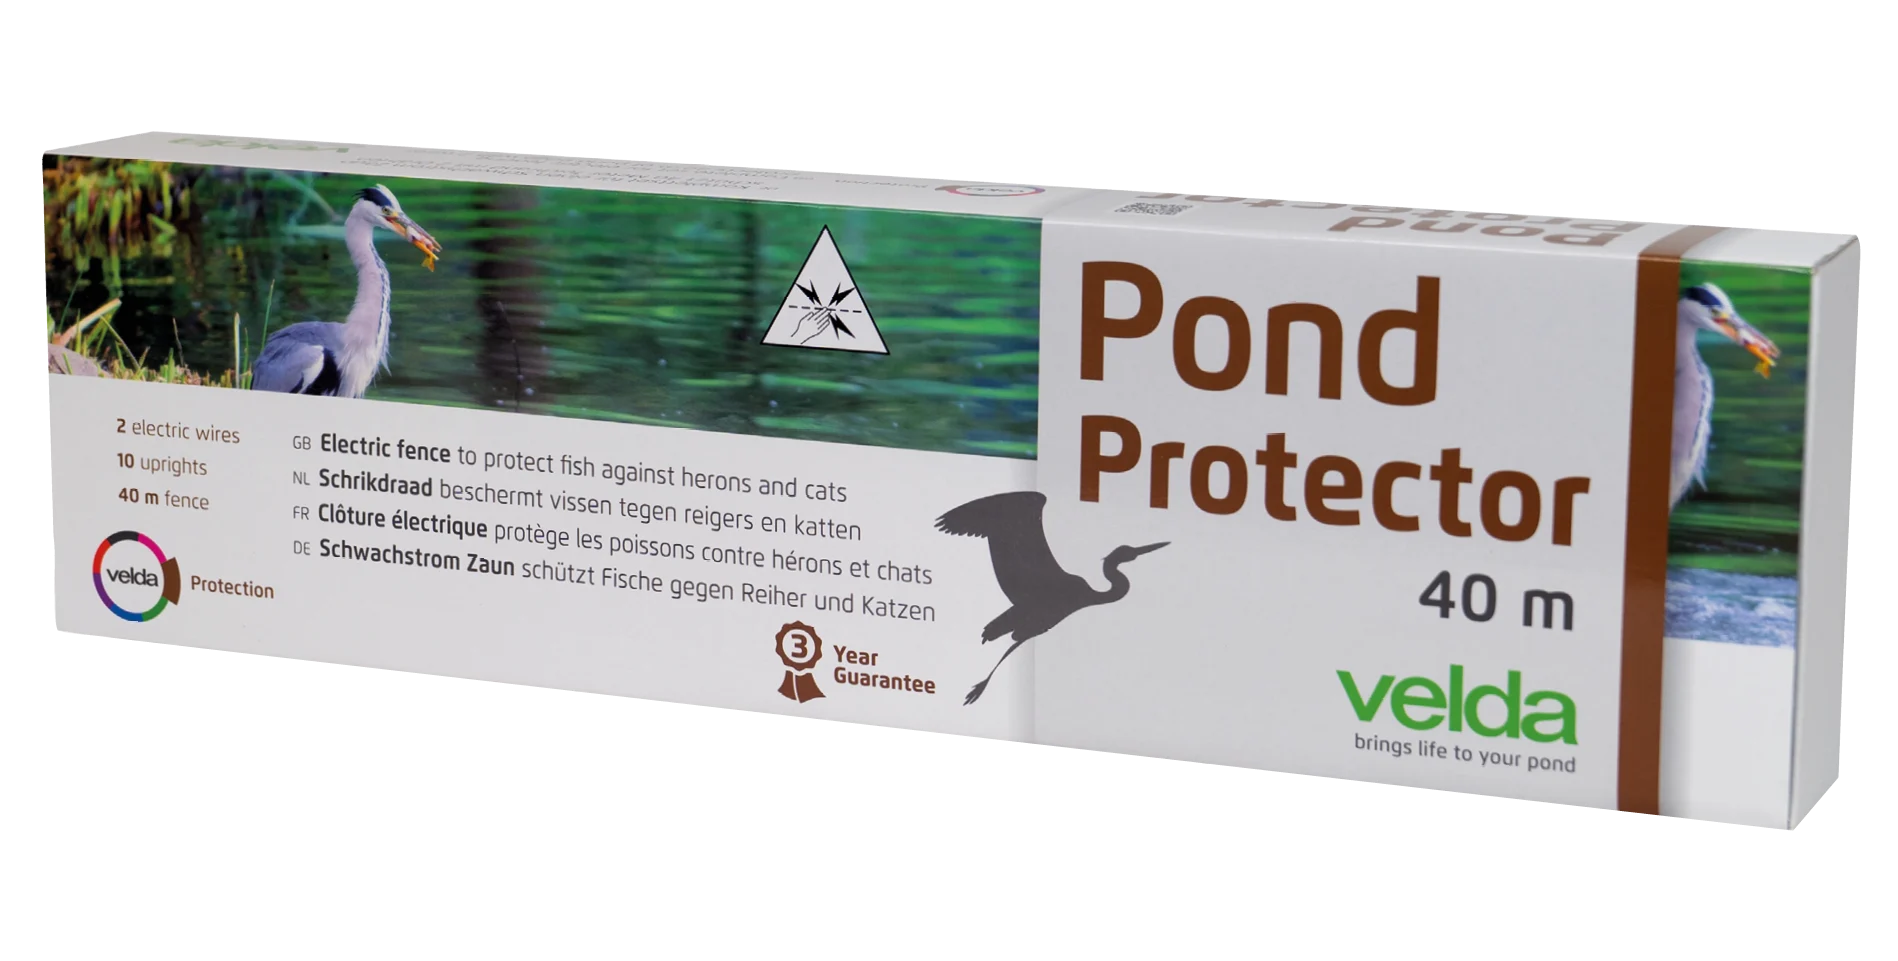 Pond Protector